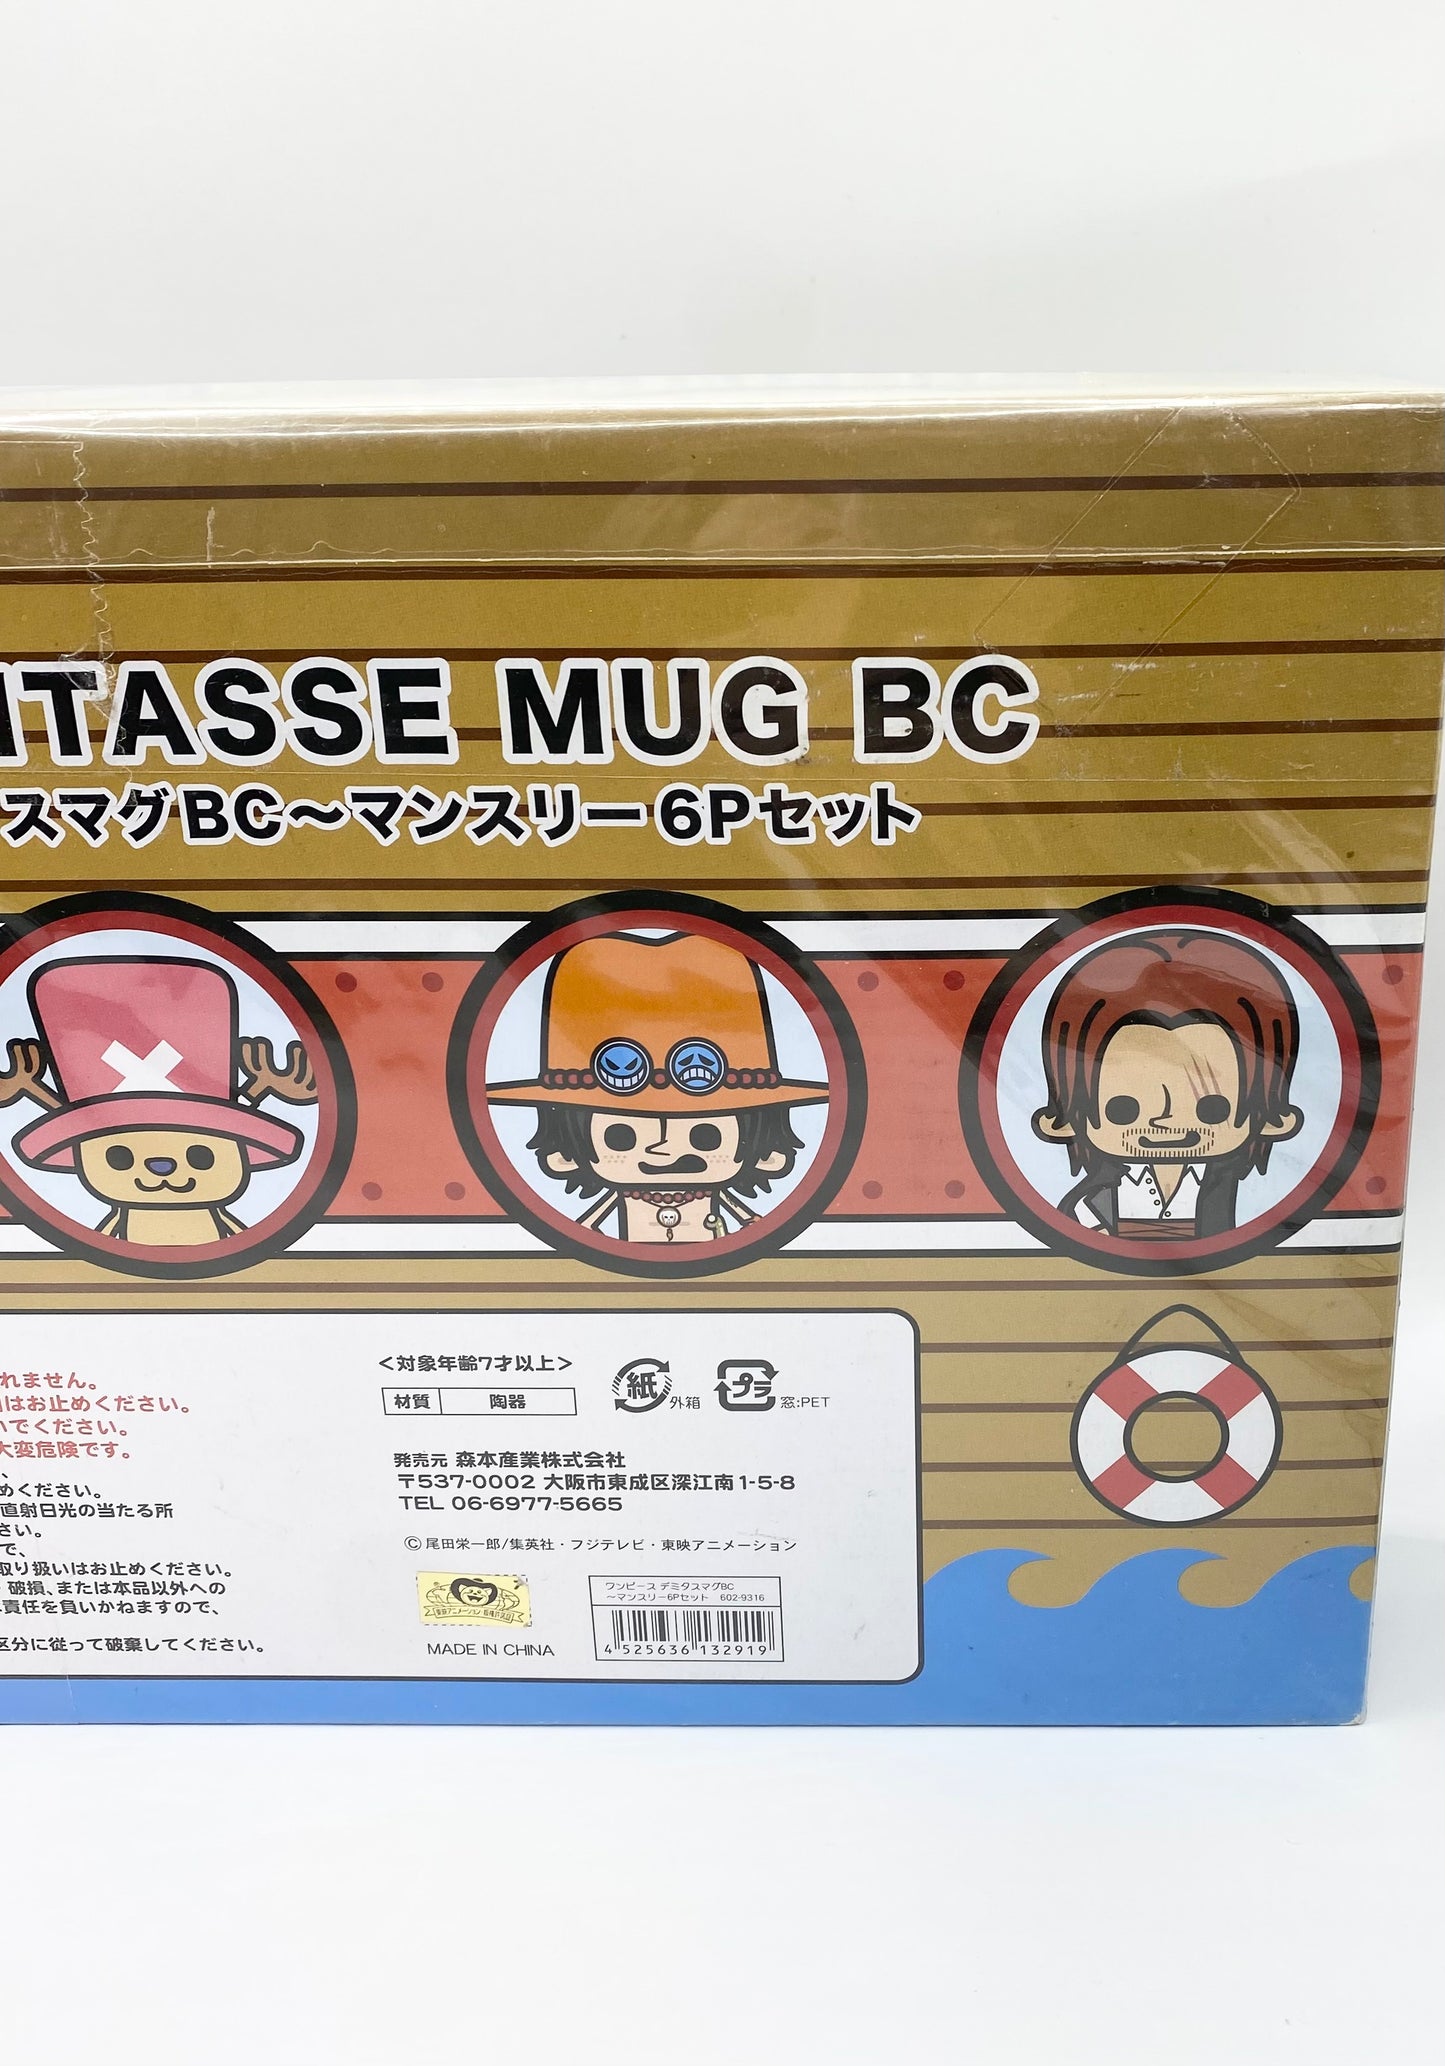 One Piece Mini Mug Collection Set of 6 Demitasse Mug BC